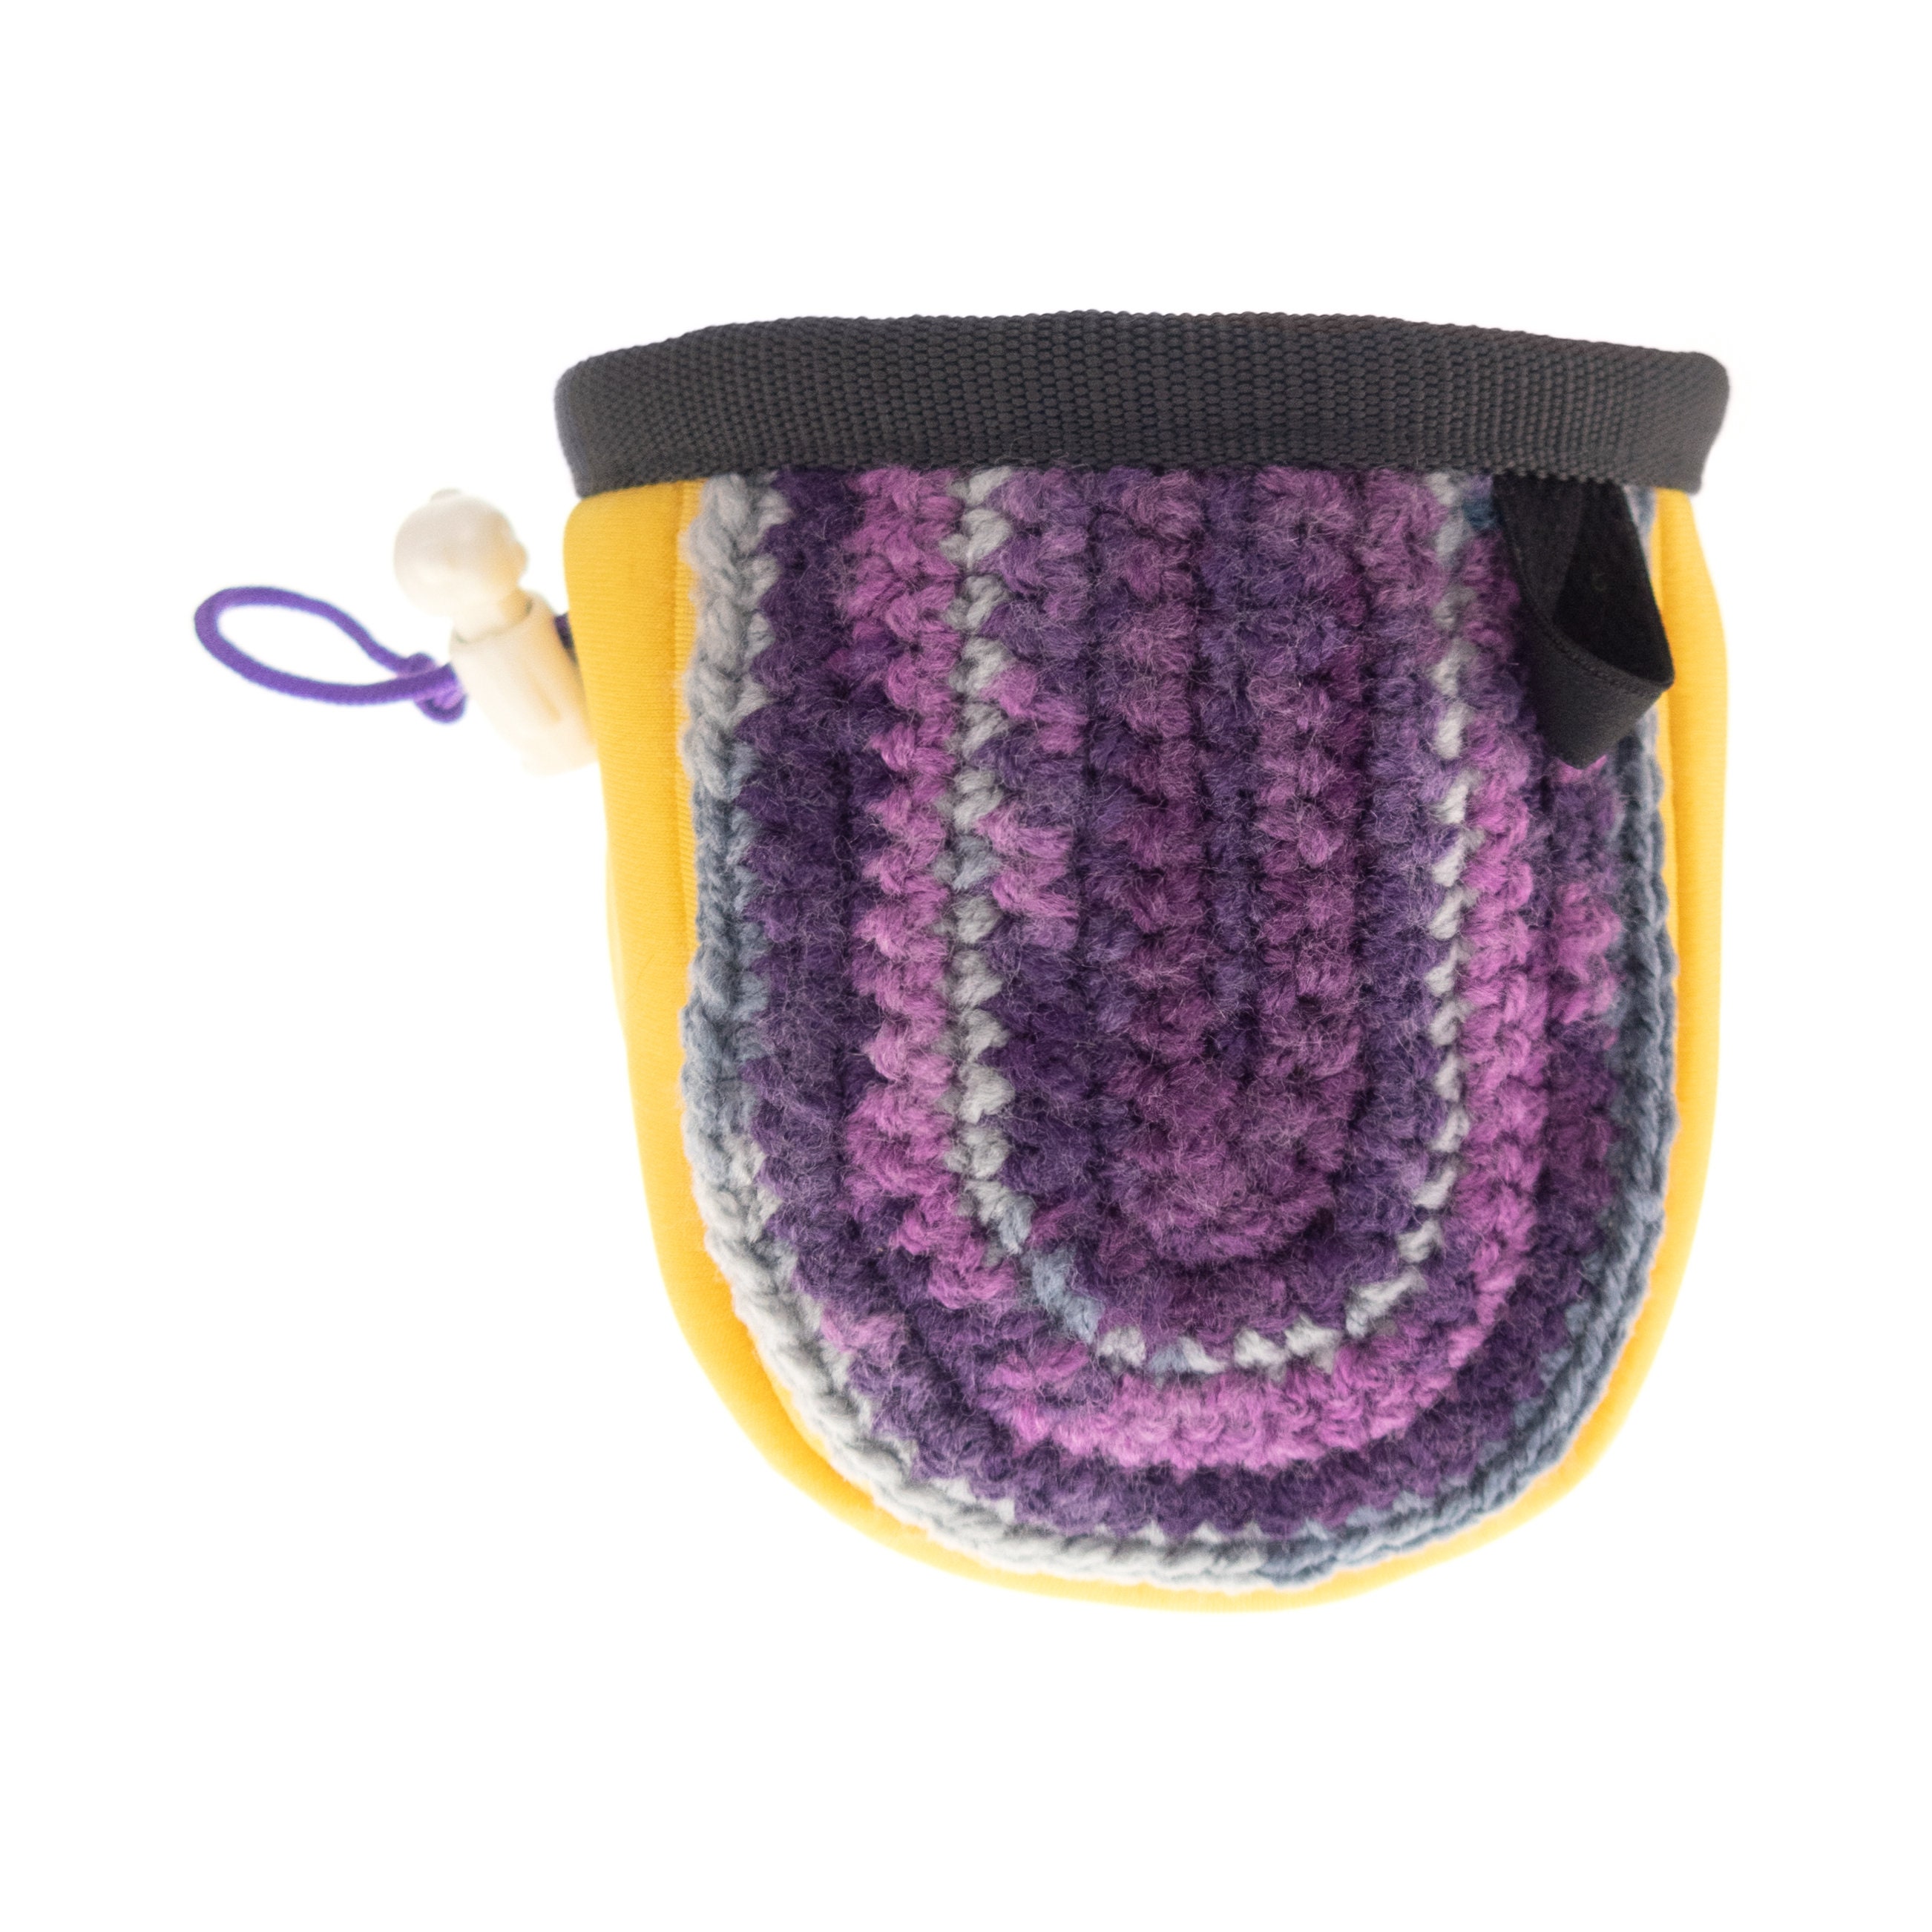 Evolv Chalk Bag Knit